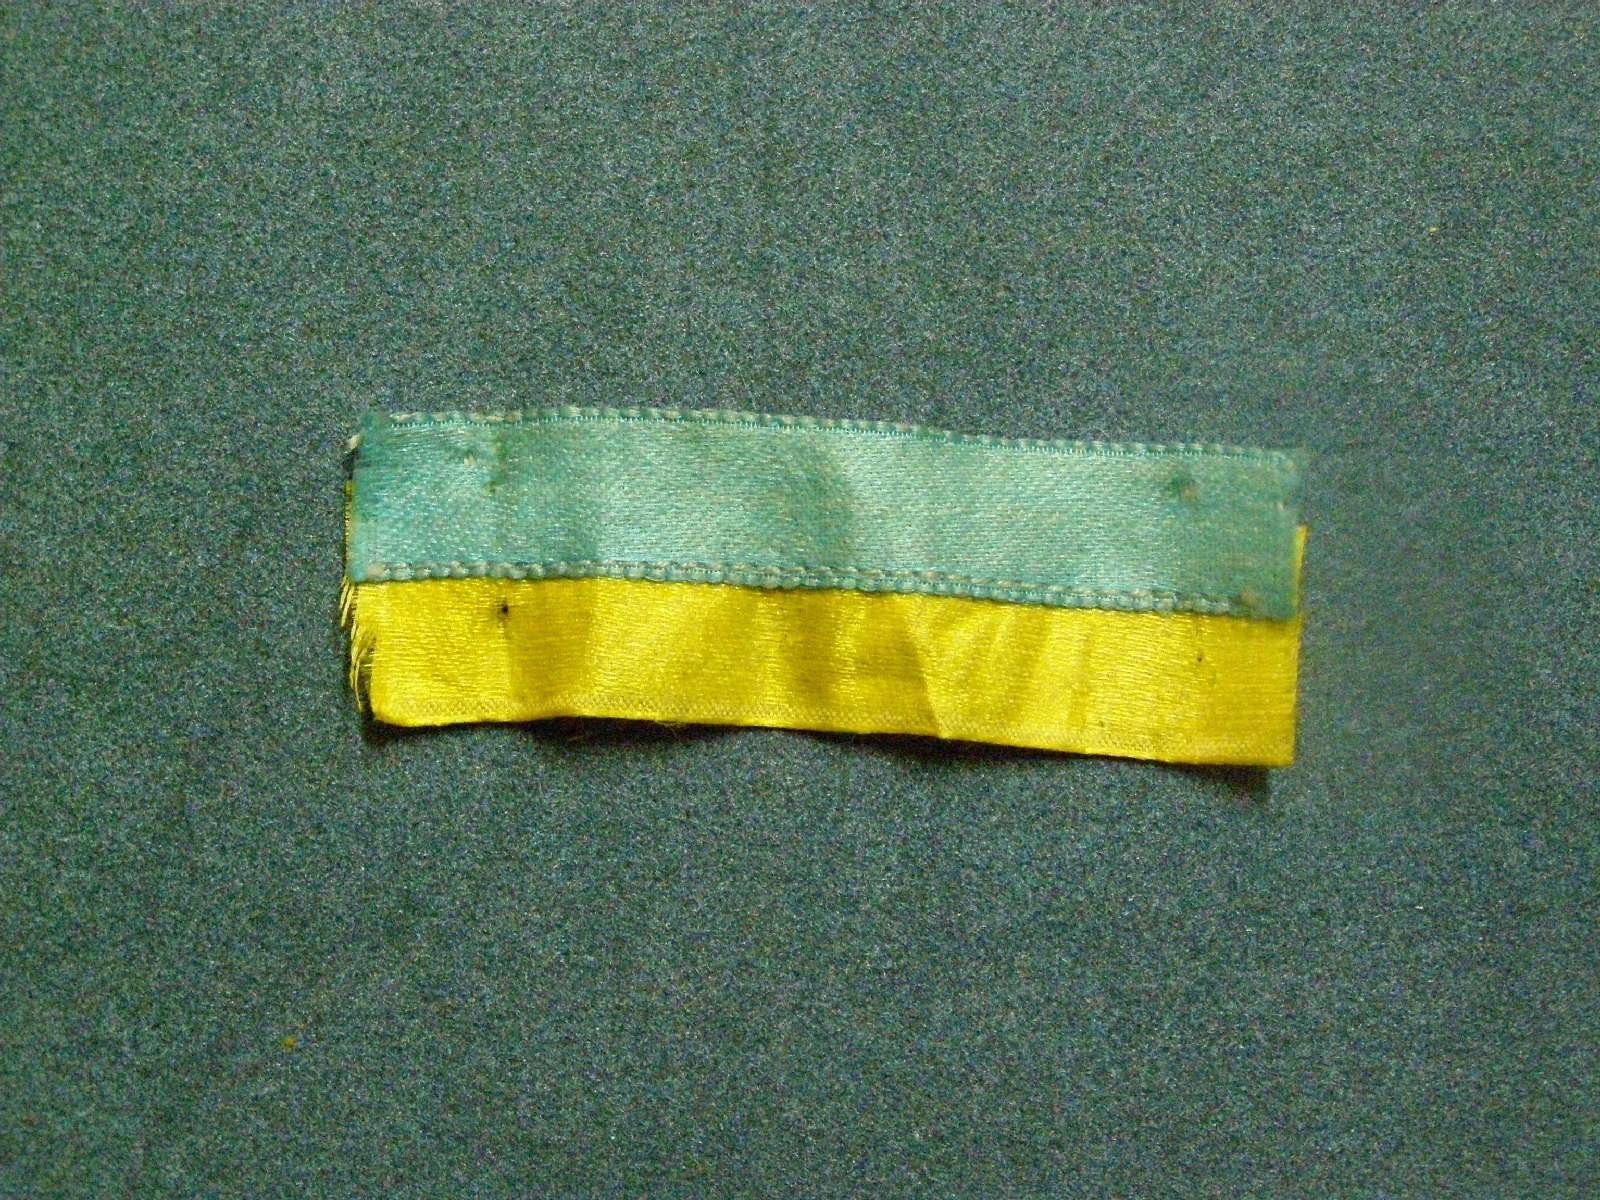 Жовто-блакитна стрічка. Фрагмент 6 см, тканина. Без дати.